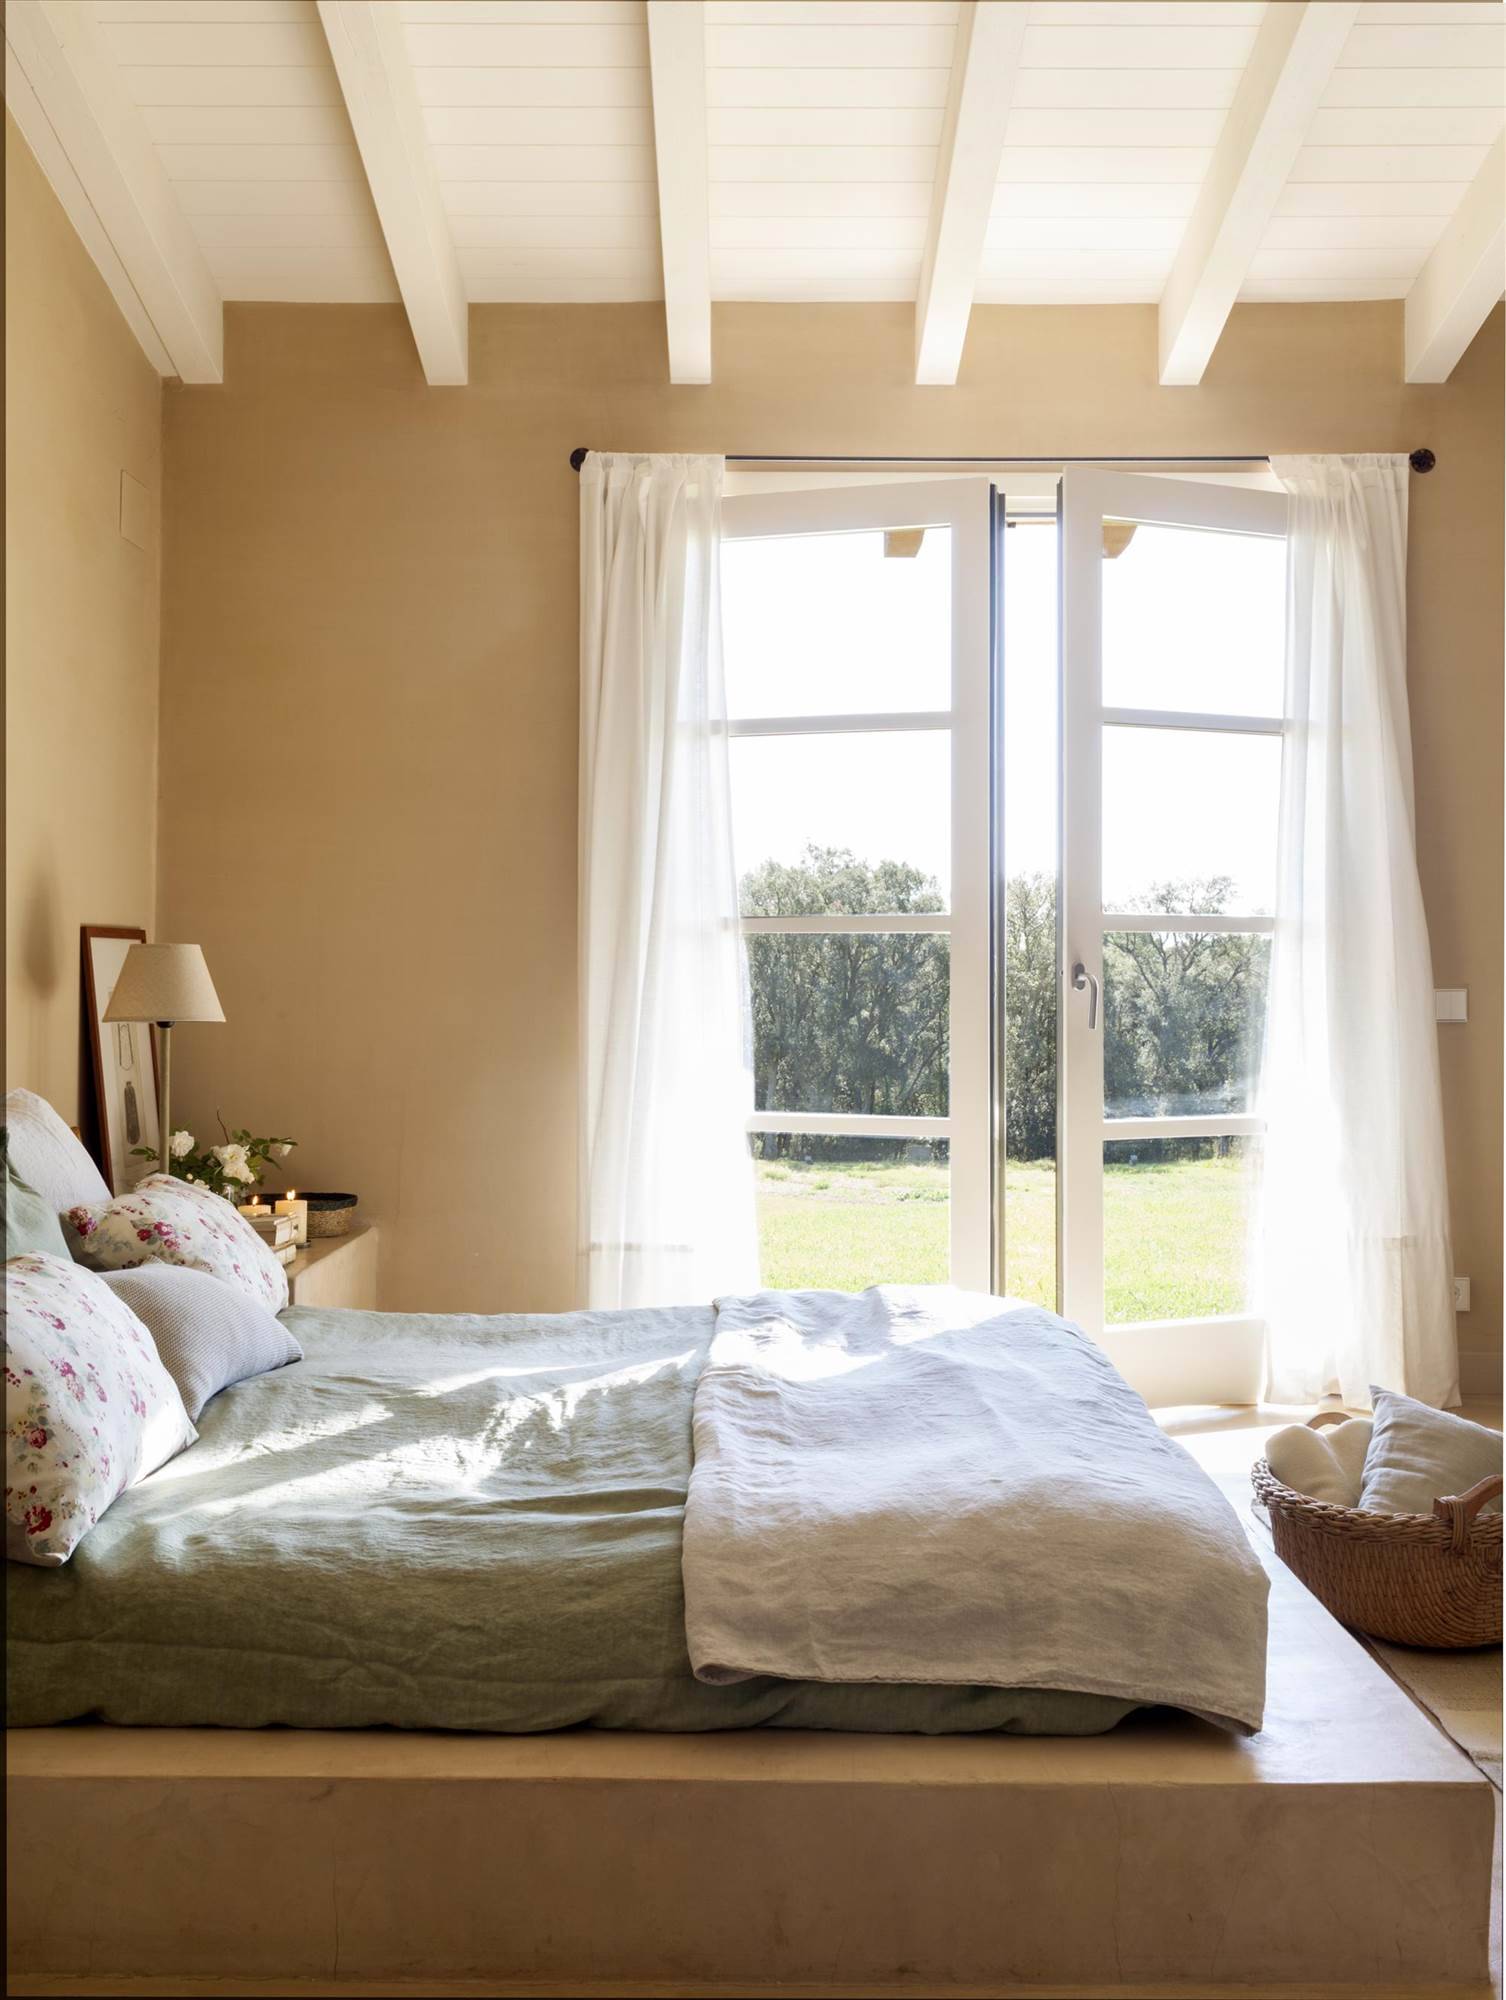 Dormitorio pequeño con ventana al exterior_437025 o f295ca72 1506x2000